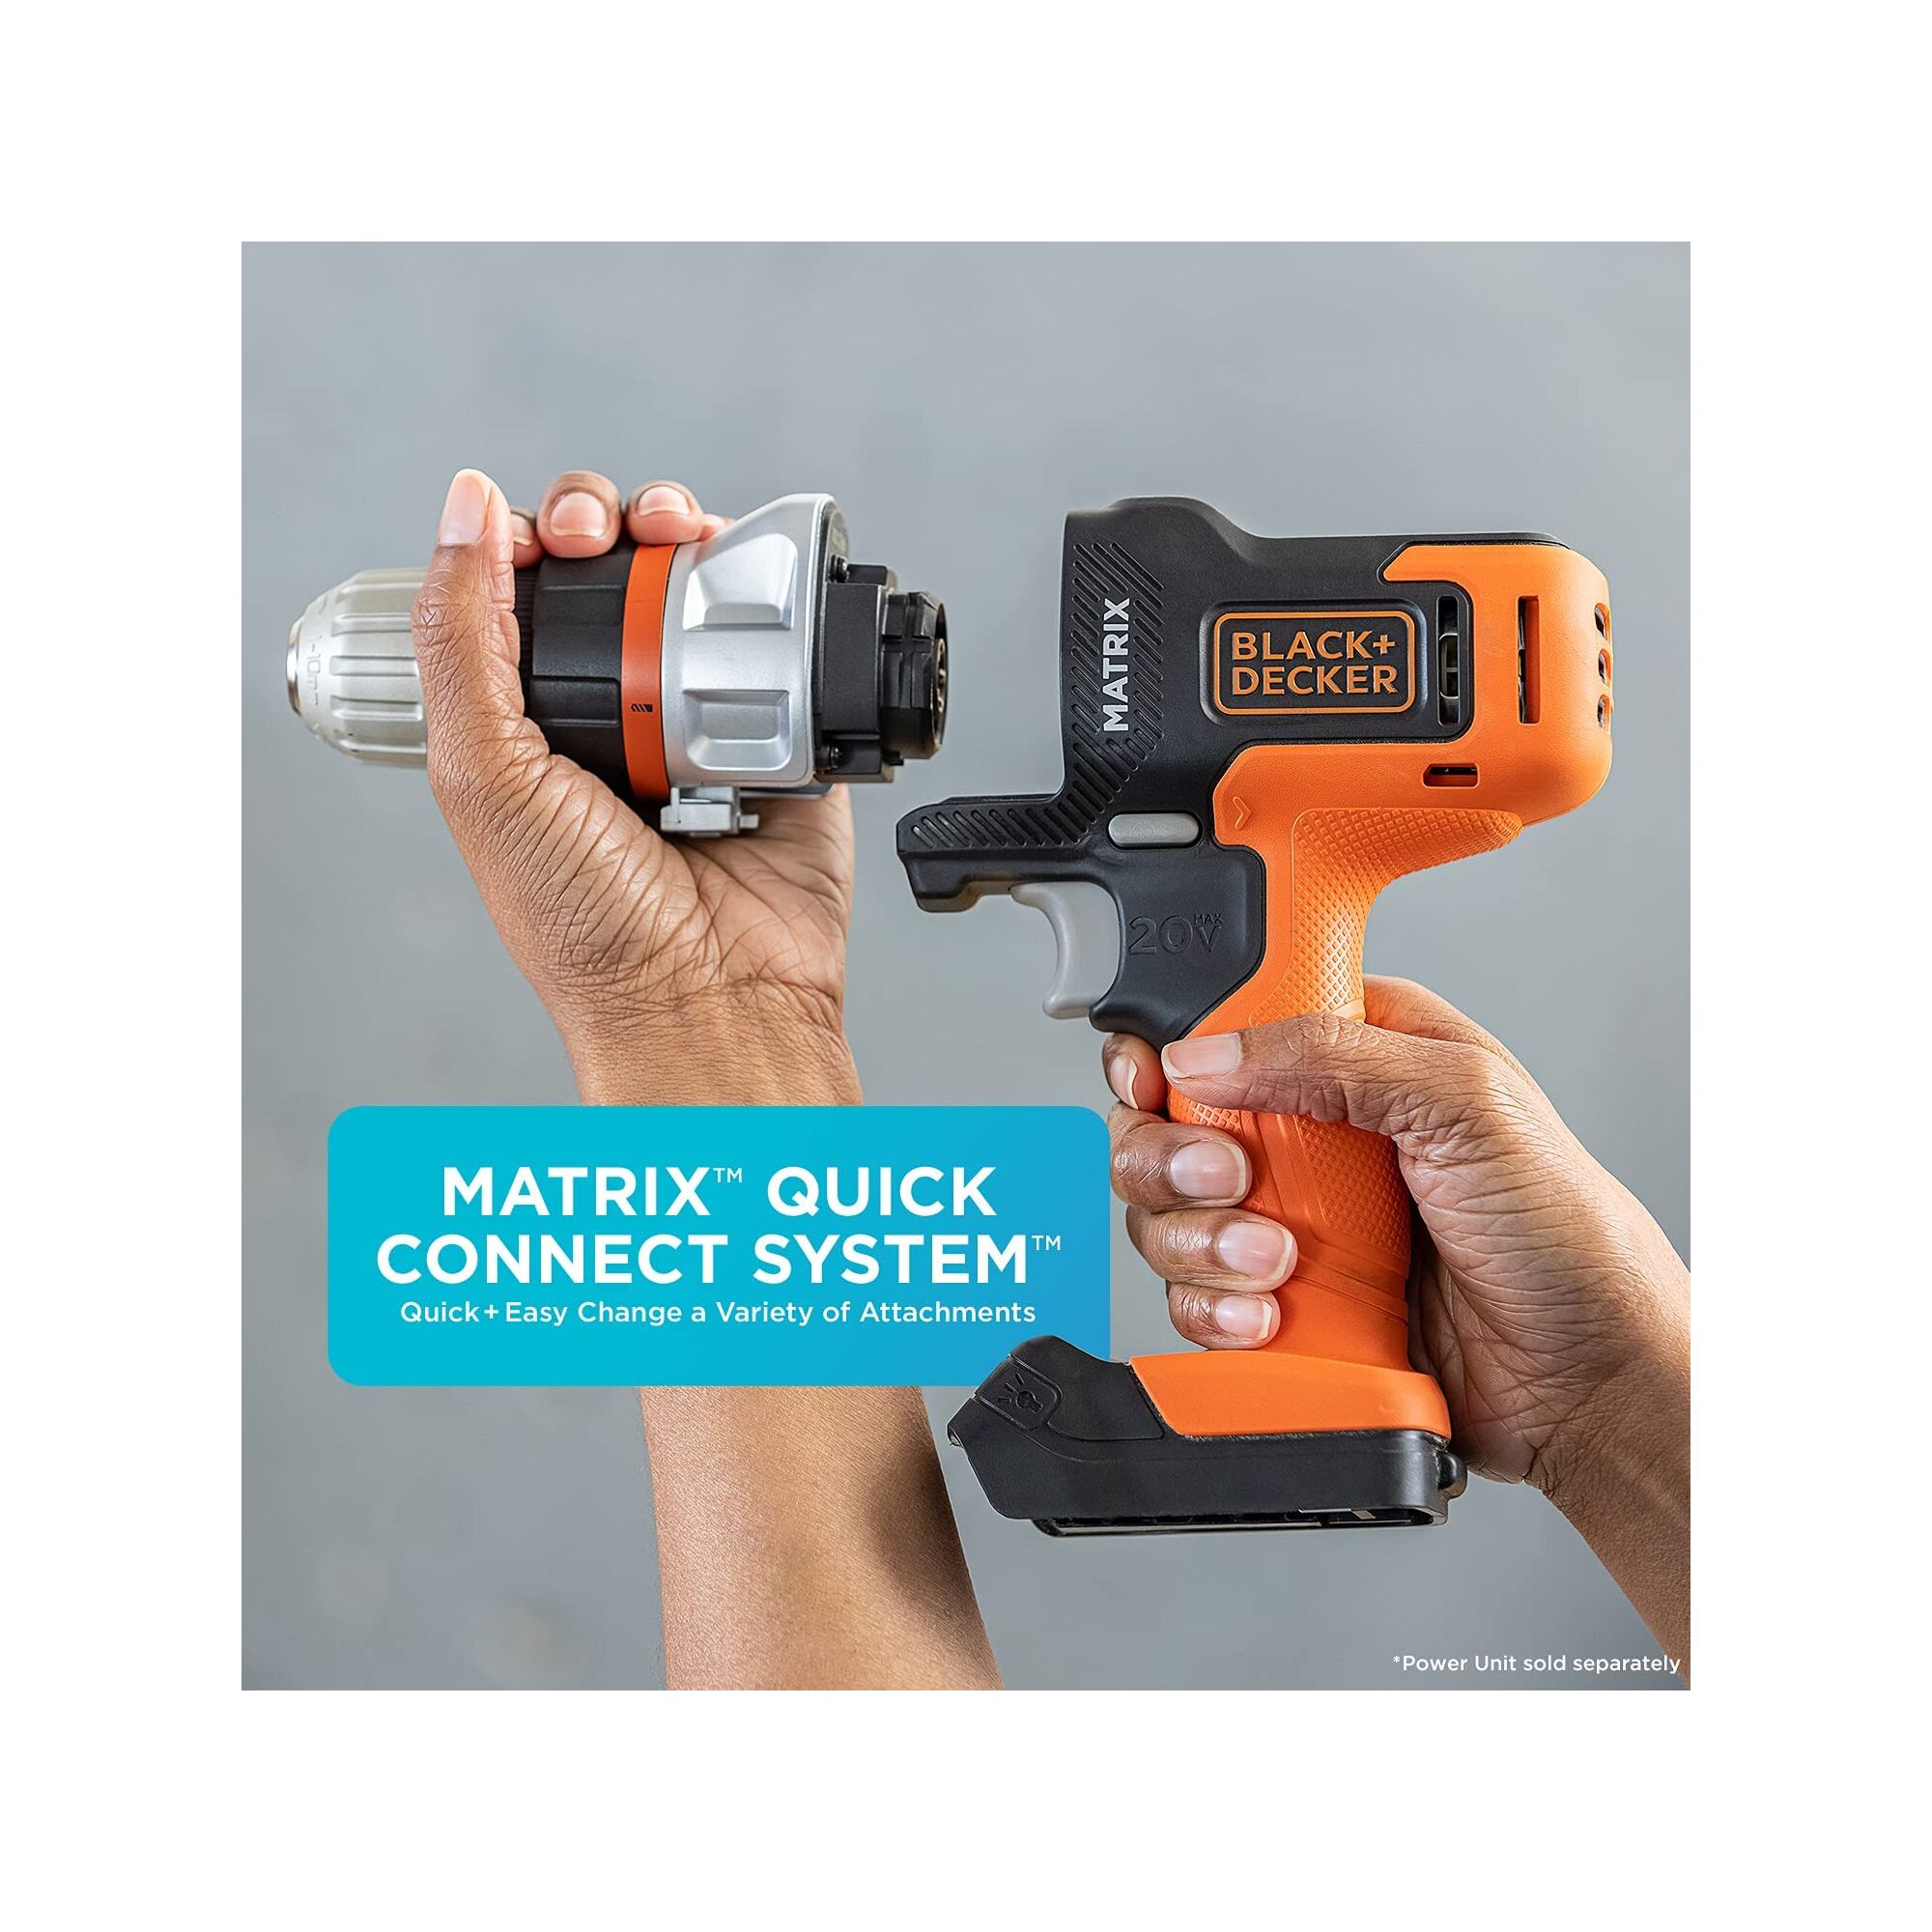 BLACK+DECKER 20V MAX Matrix Cordless Drill/Driver - image 3 of 11